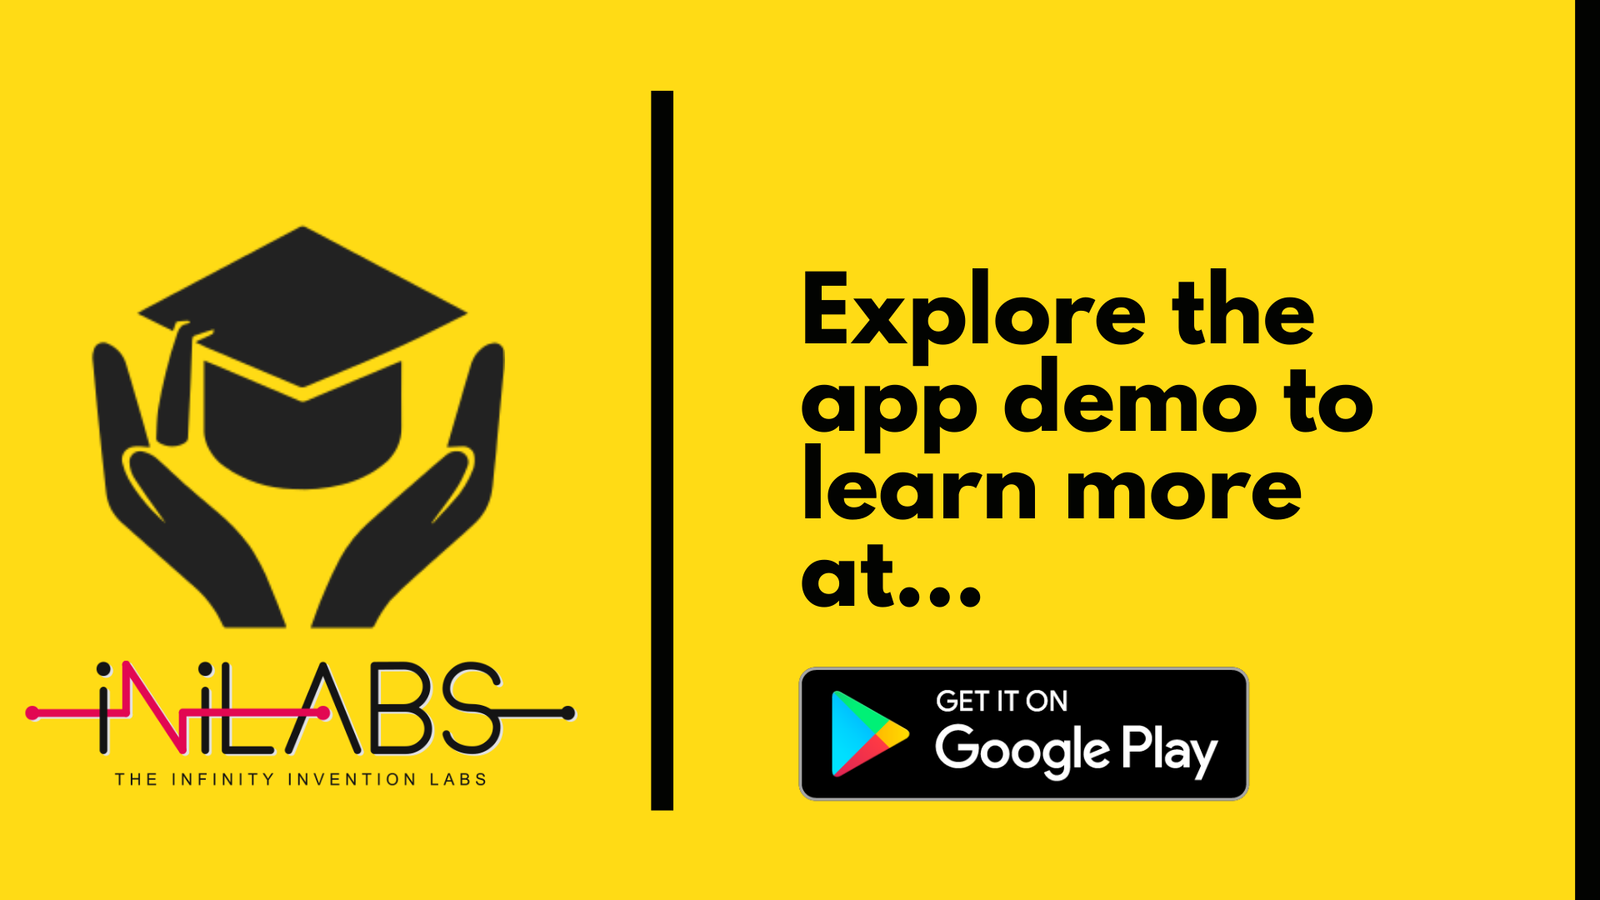 inilabs school app explore more